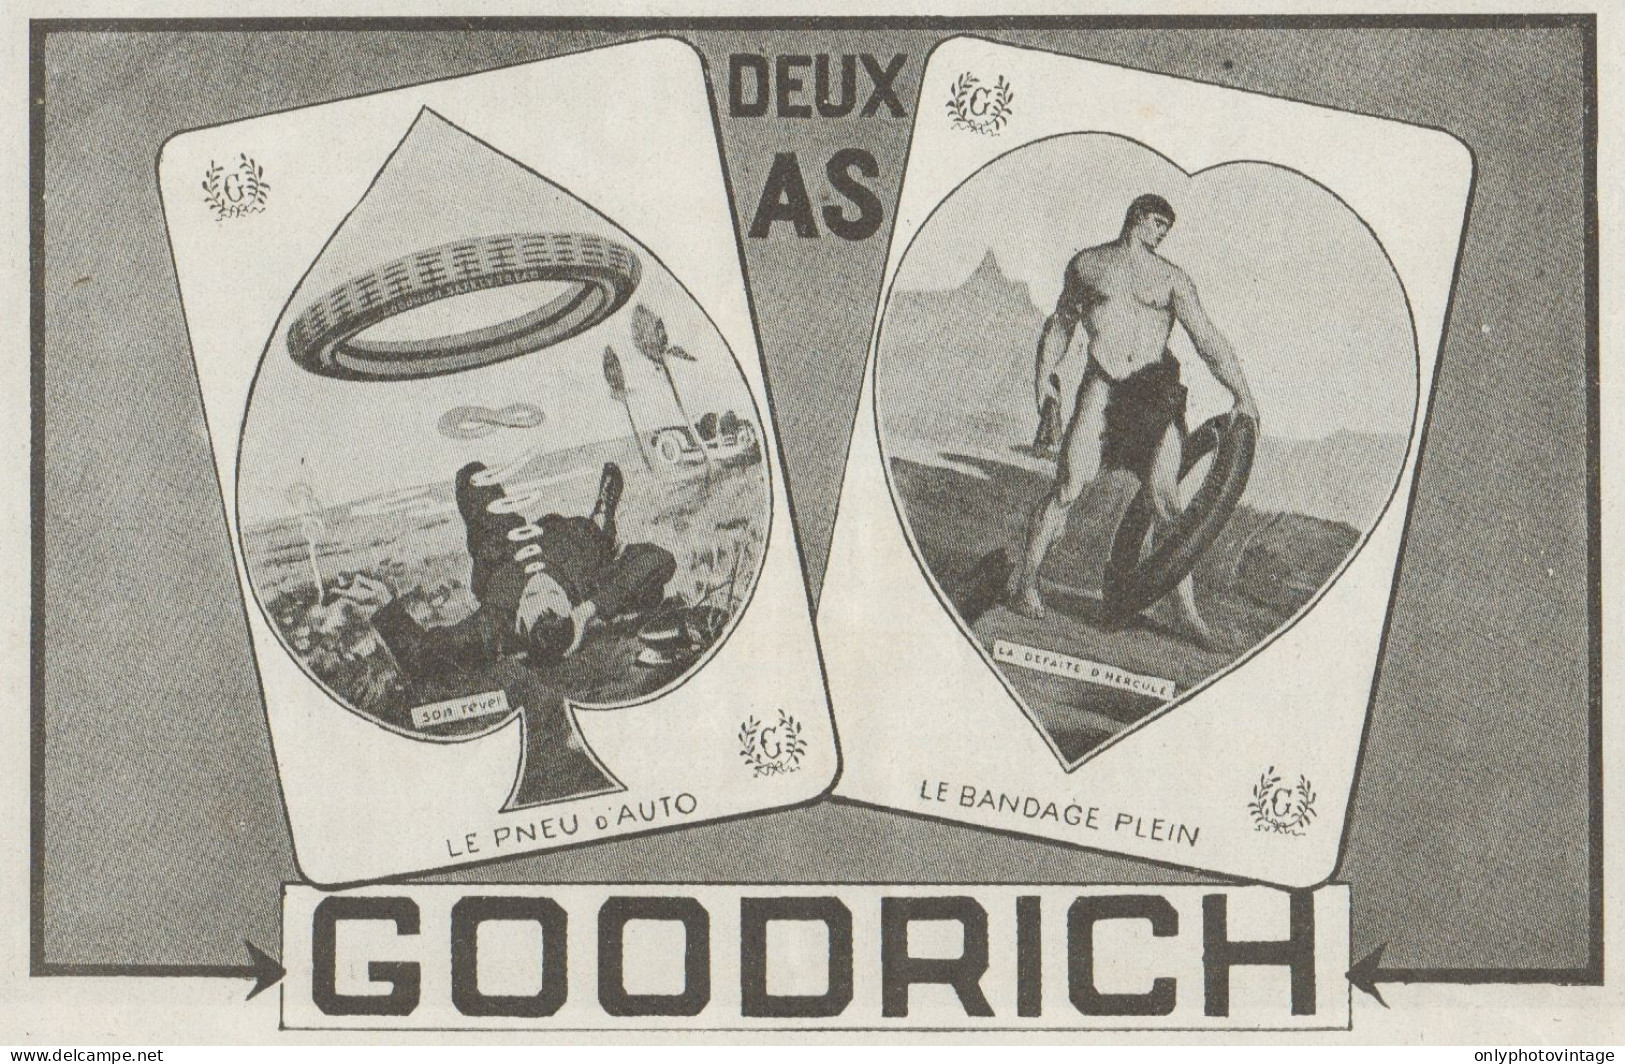 Pneus GOODRICH - Pubblicità D'epoca - 1919 Old Advertising - Werbung